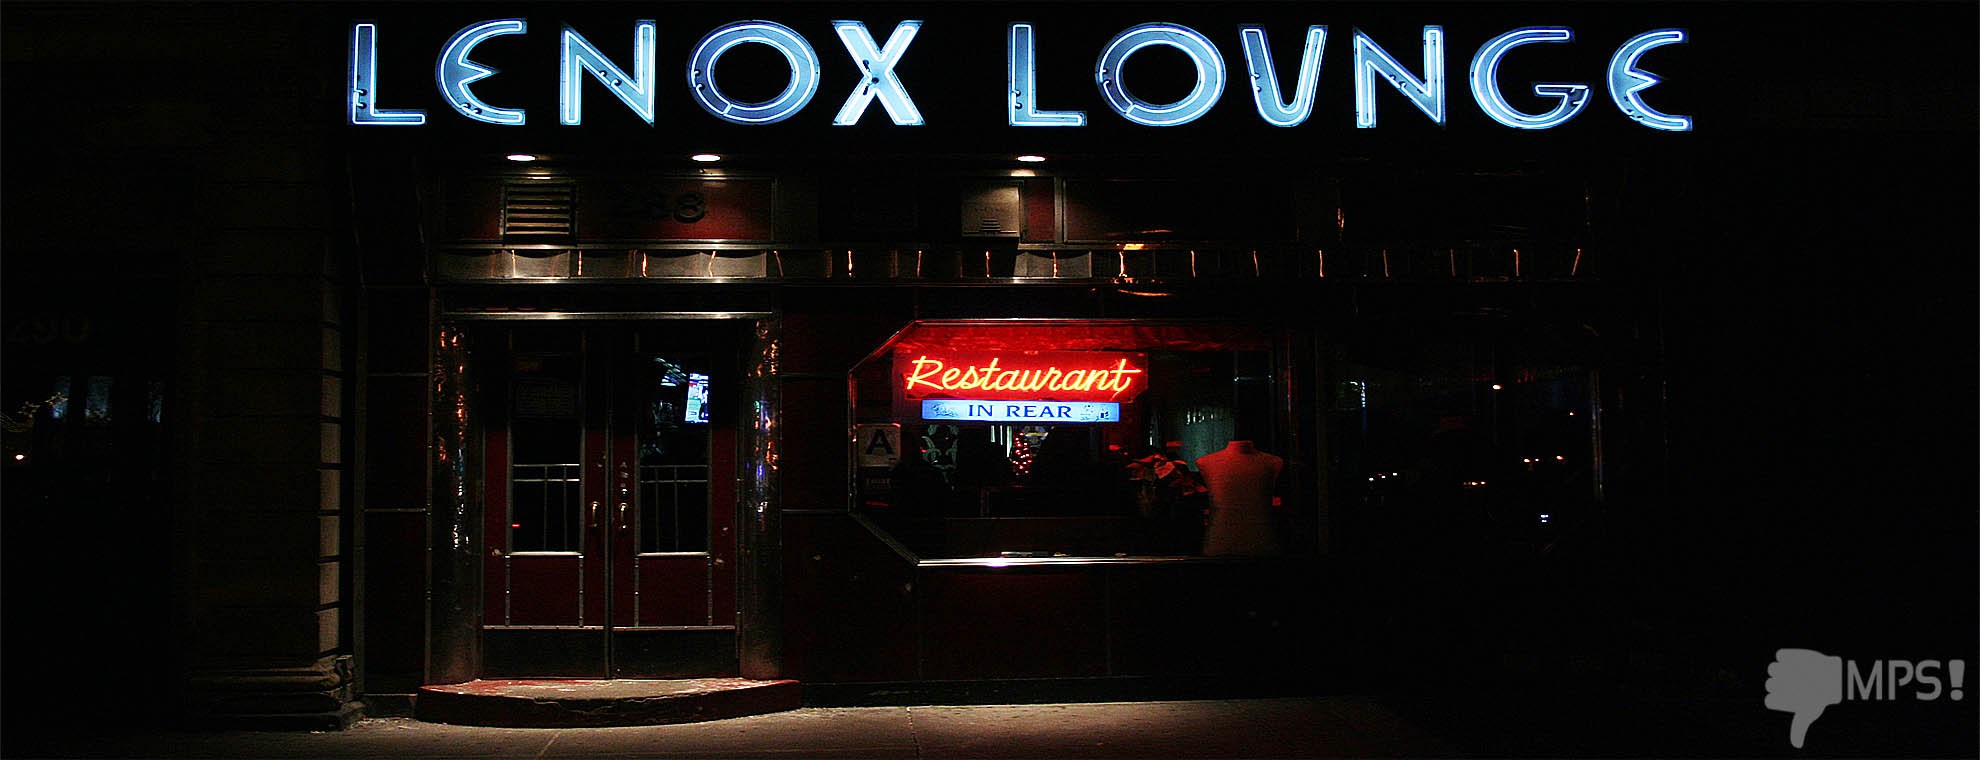 Lenox Lounge,NYC